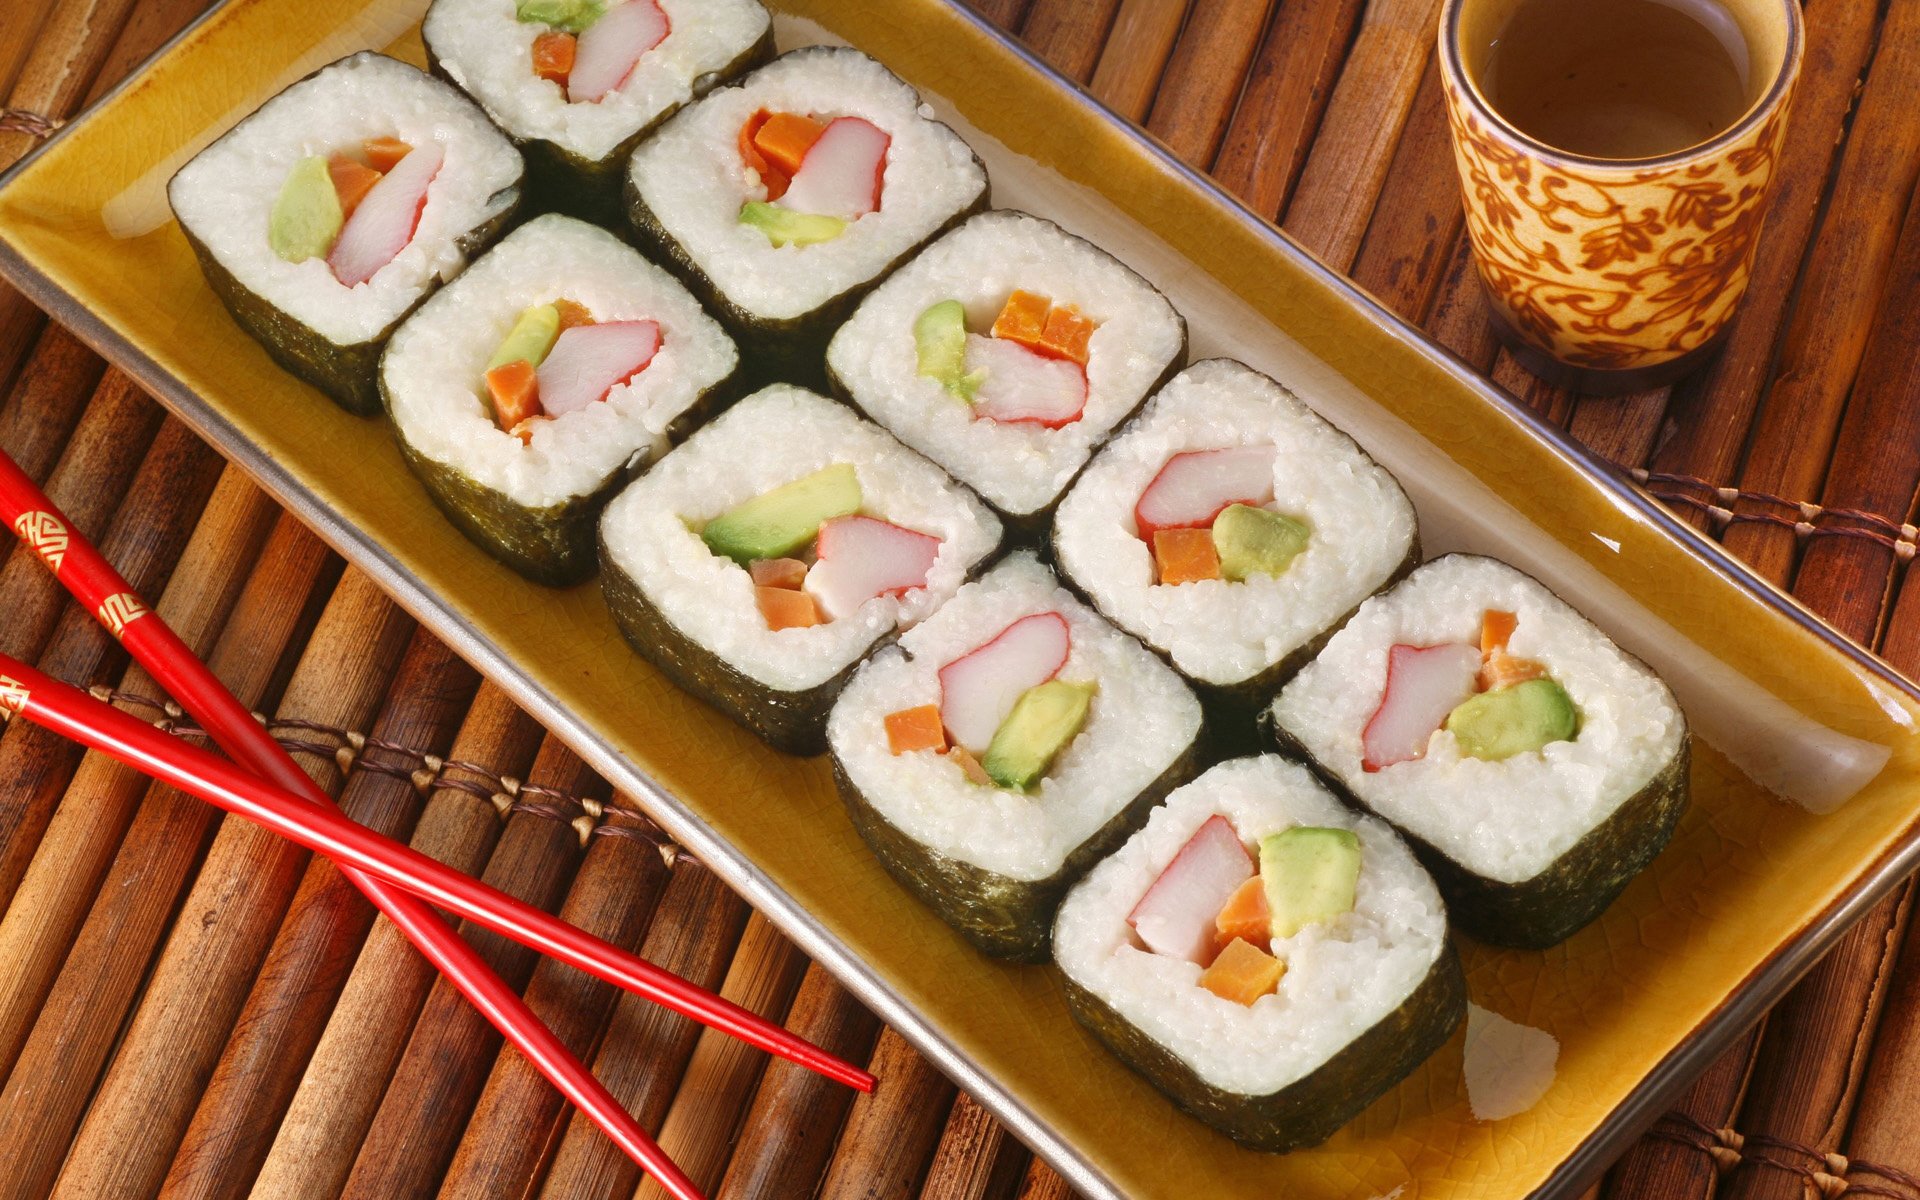  Sushi HD Wallpaper Background Image 1920x1200 ID 